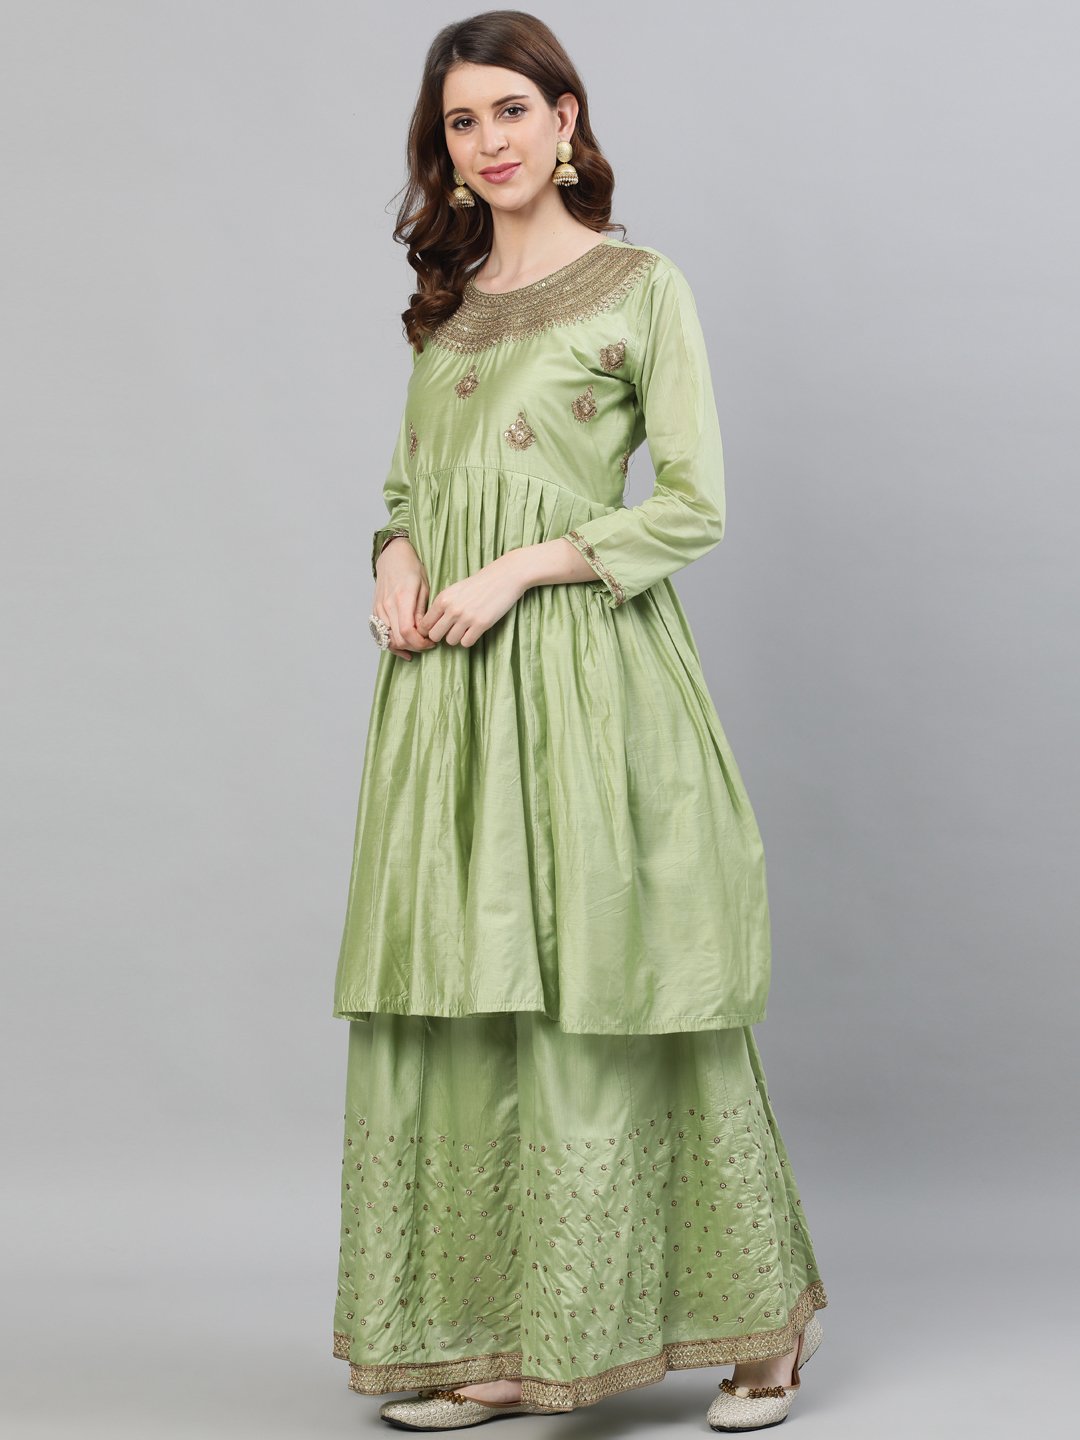 Ishin Women's Rayon Green Embroidered Anarkali Short Kurta Skirt Dupatta Set